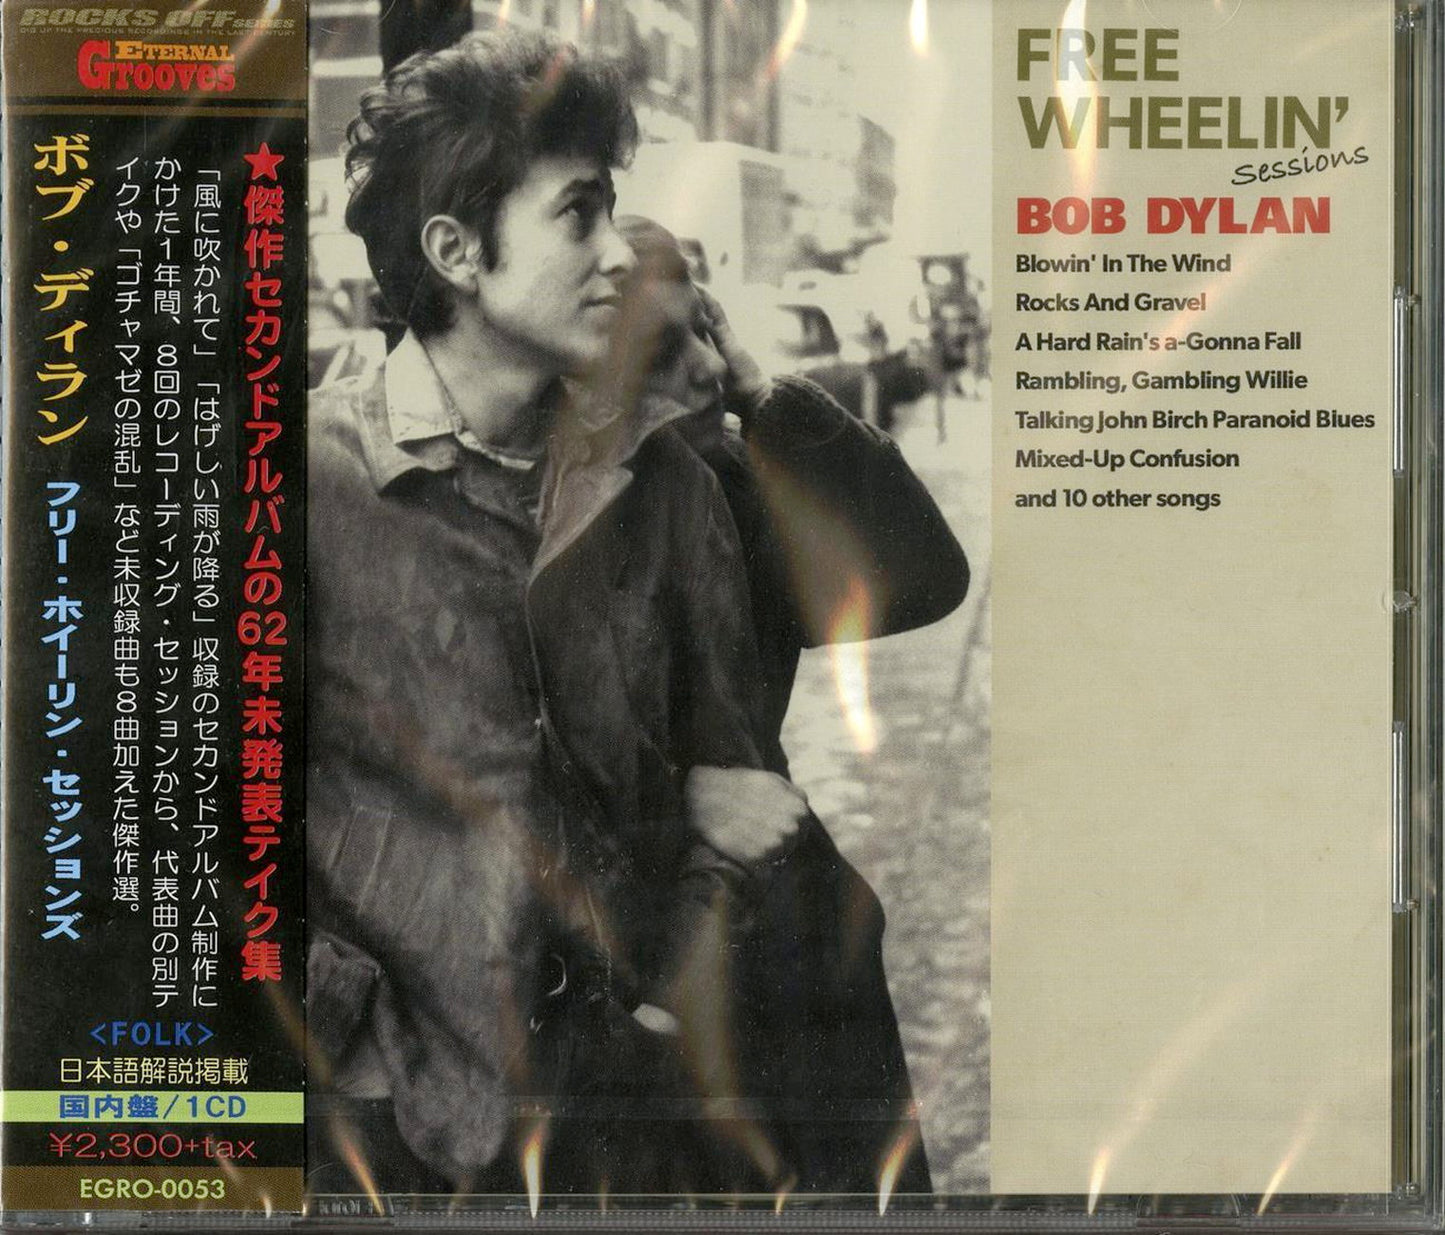 Bob Dylan - Free Wheelin' Sessions - Japan CD